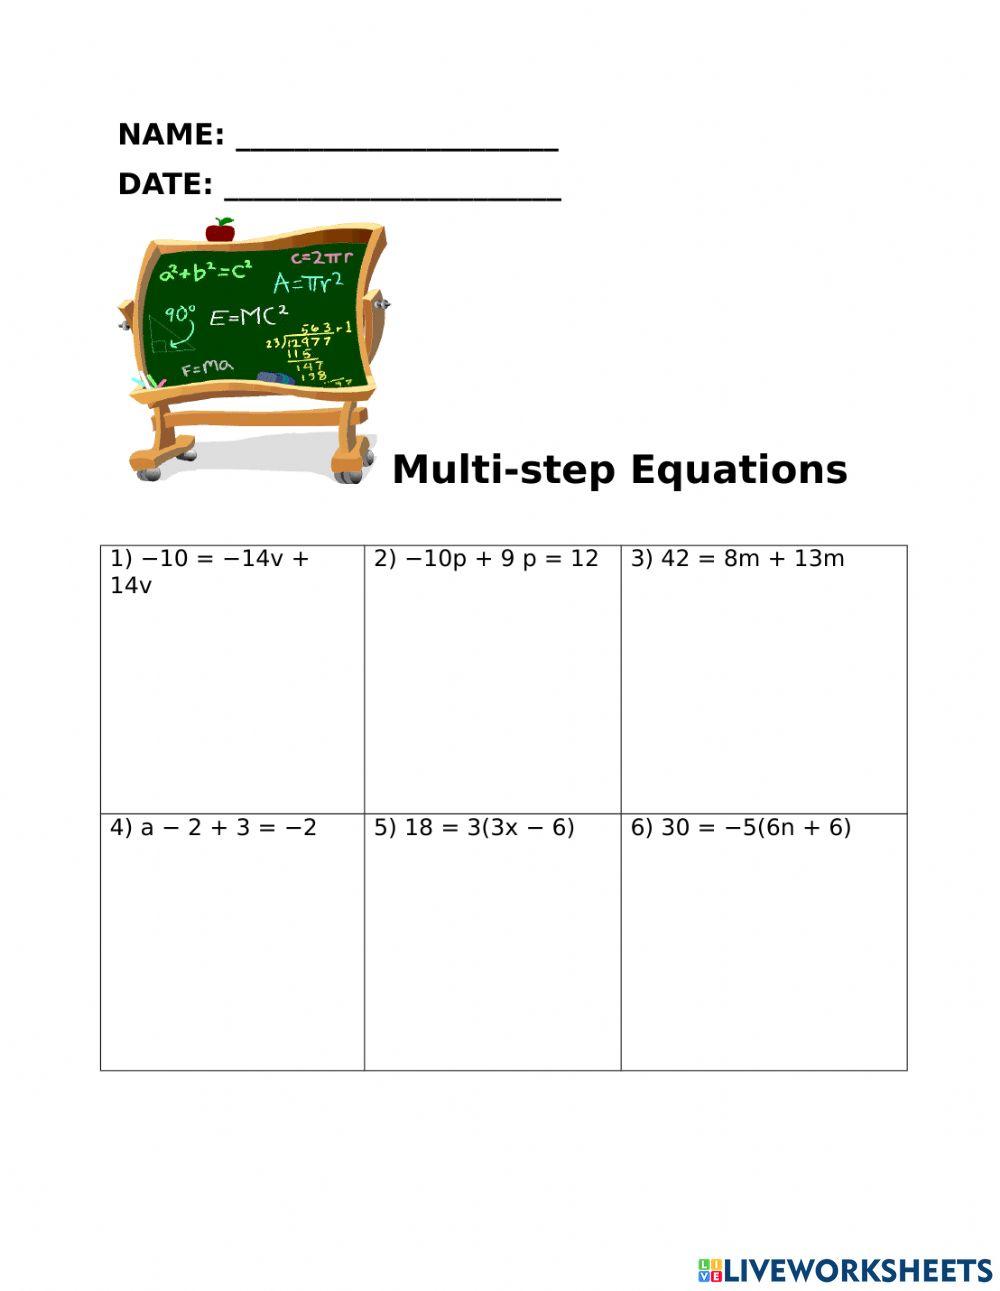 Multi-step Equations